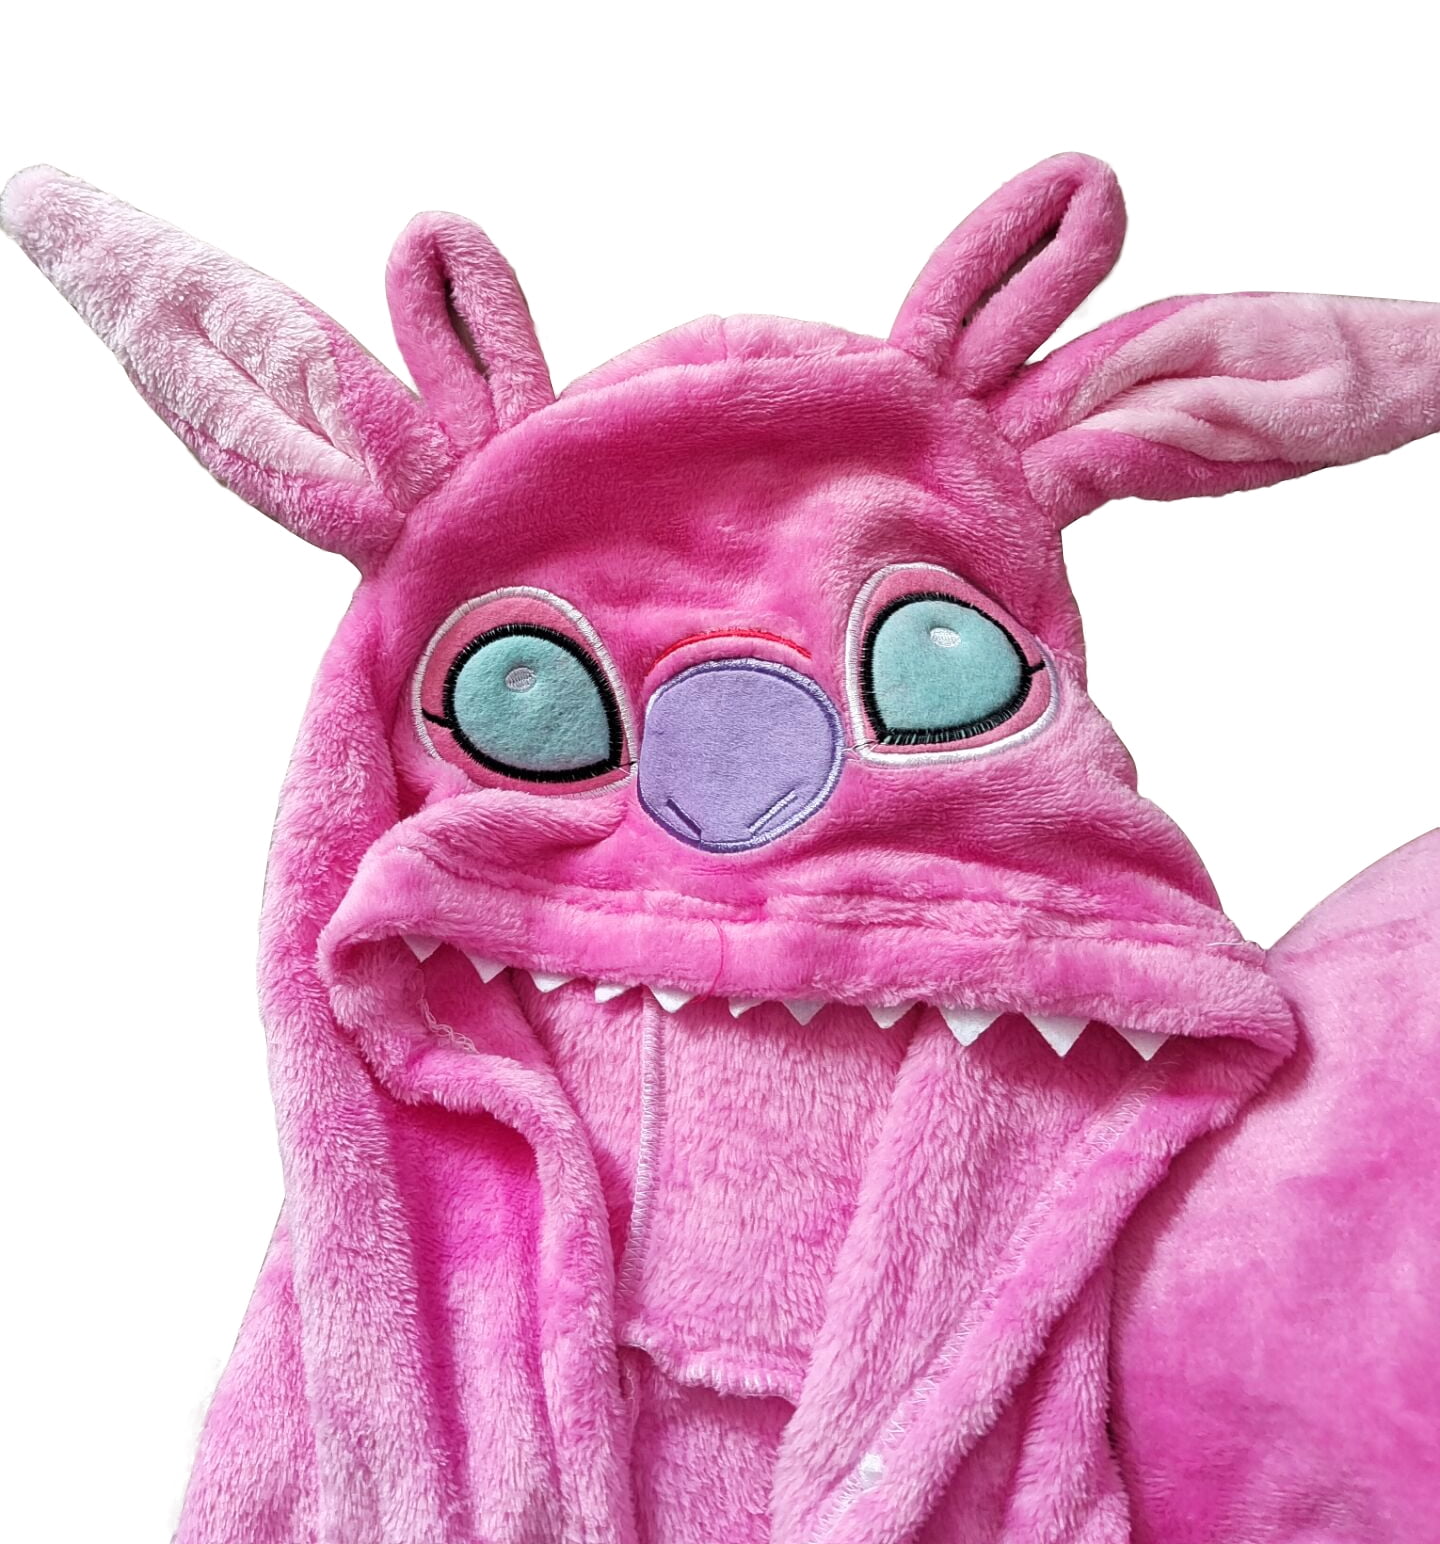 TBWYF Onesie Costumes One Piece Pajama Unisex Union Suits Animal Costume Pink Stitch XL[173CM-185CM] - Walmart.com